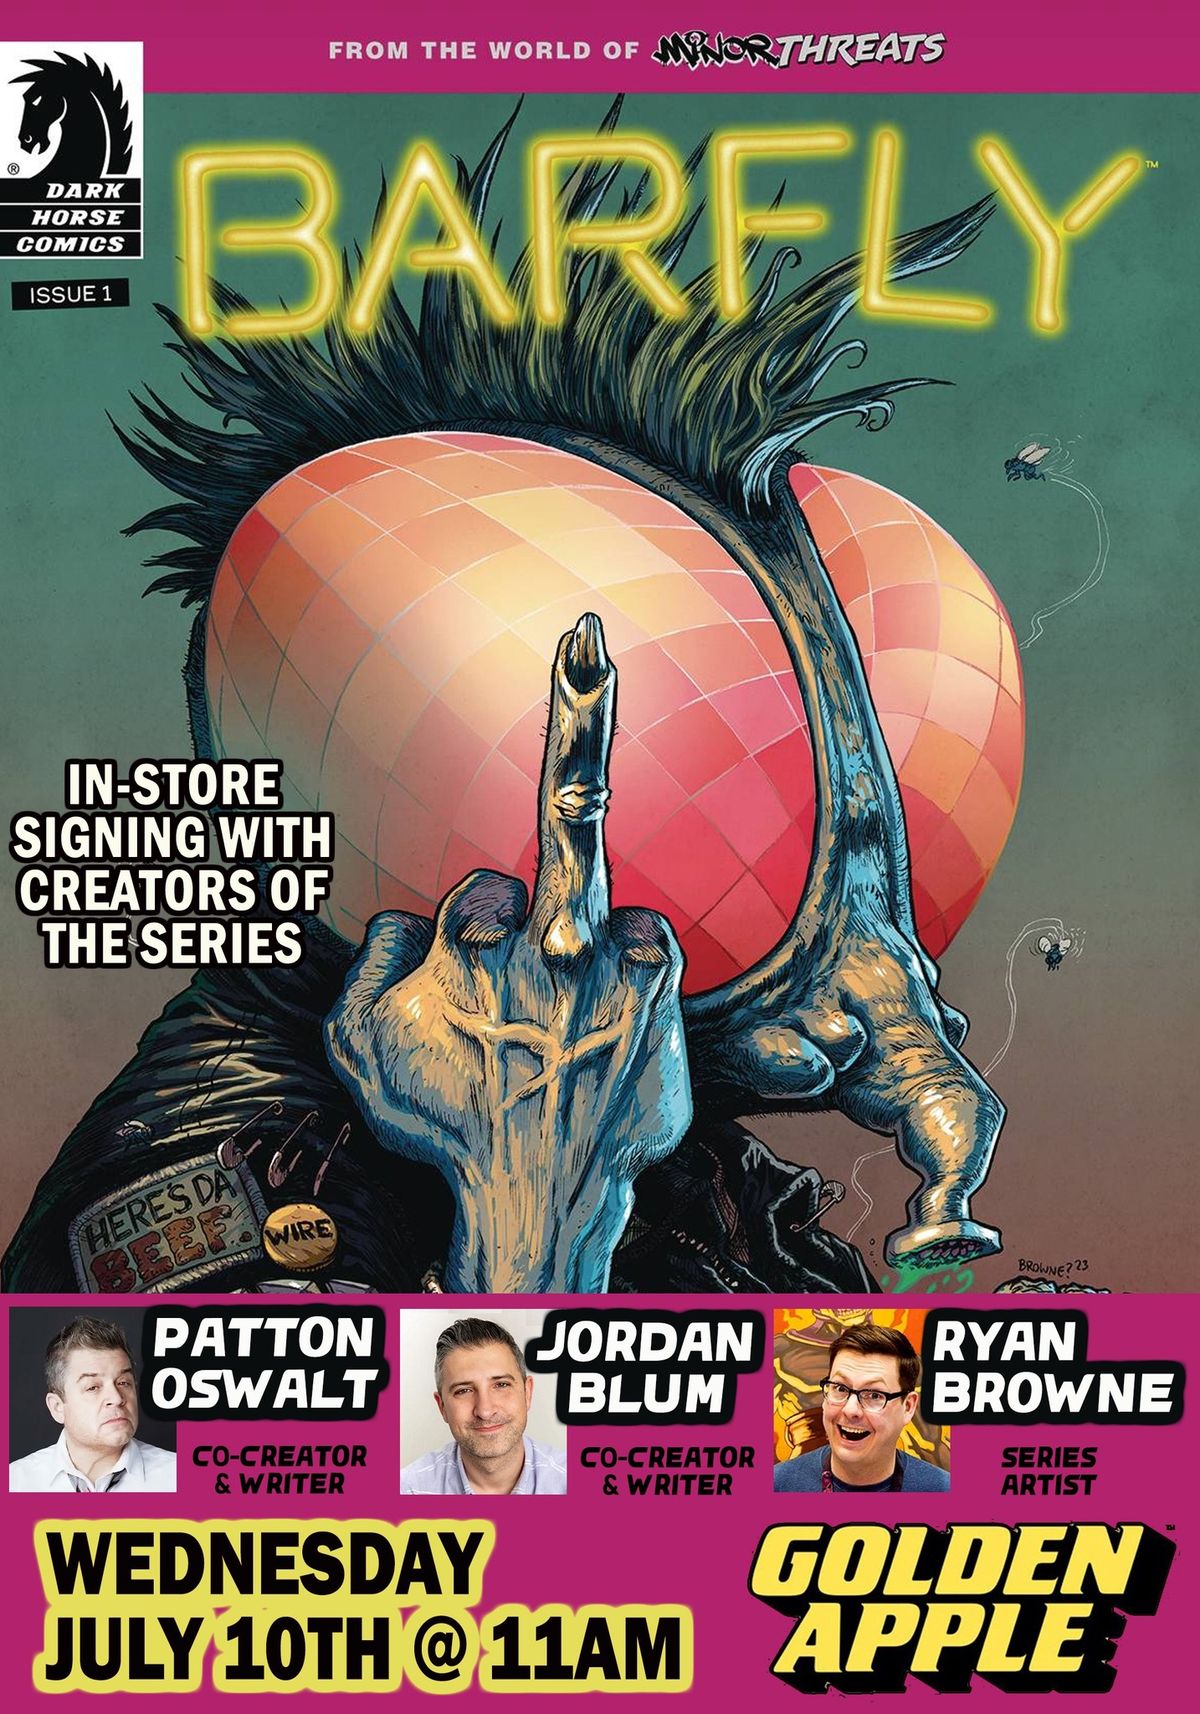 Barfly Comic Release with Dark Horse Creators Patton, Jordan and Ryan